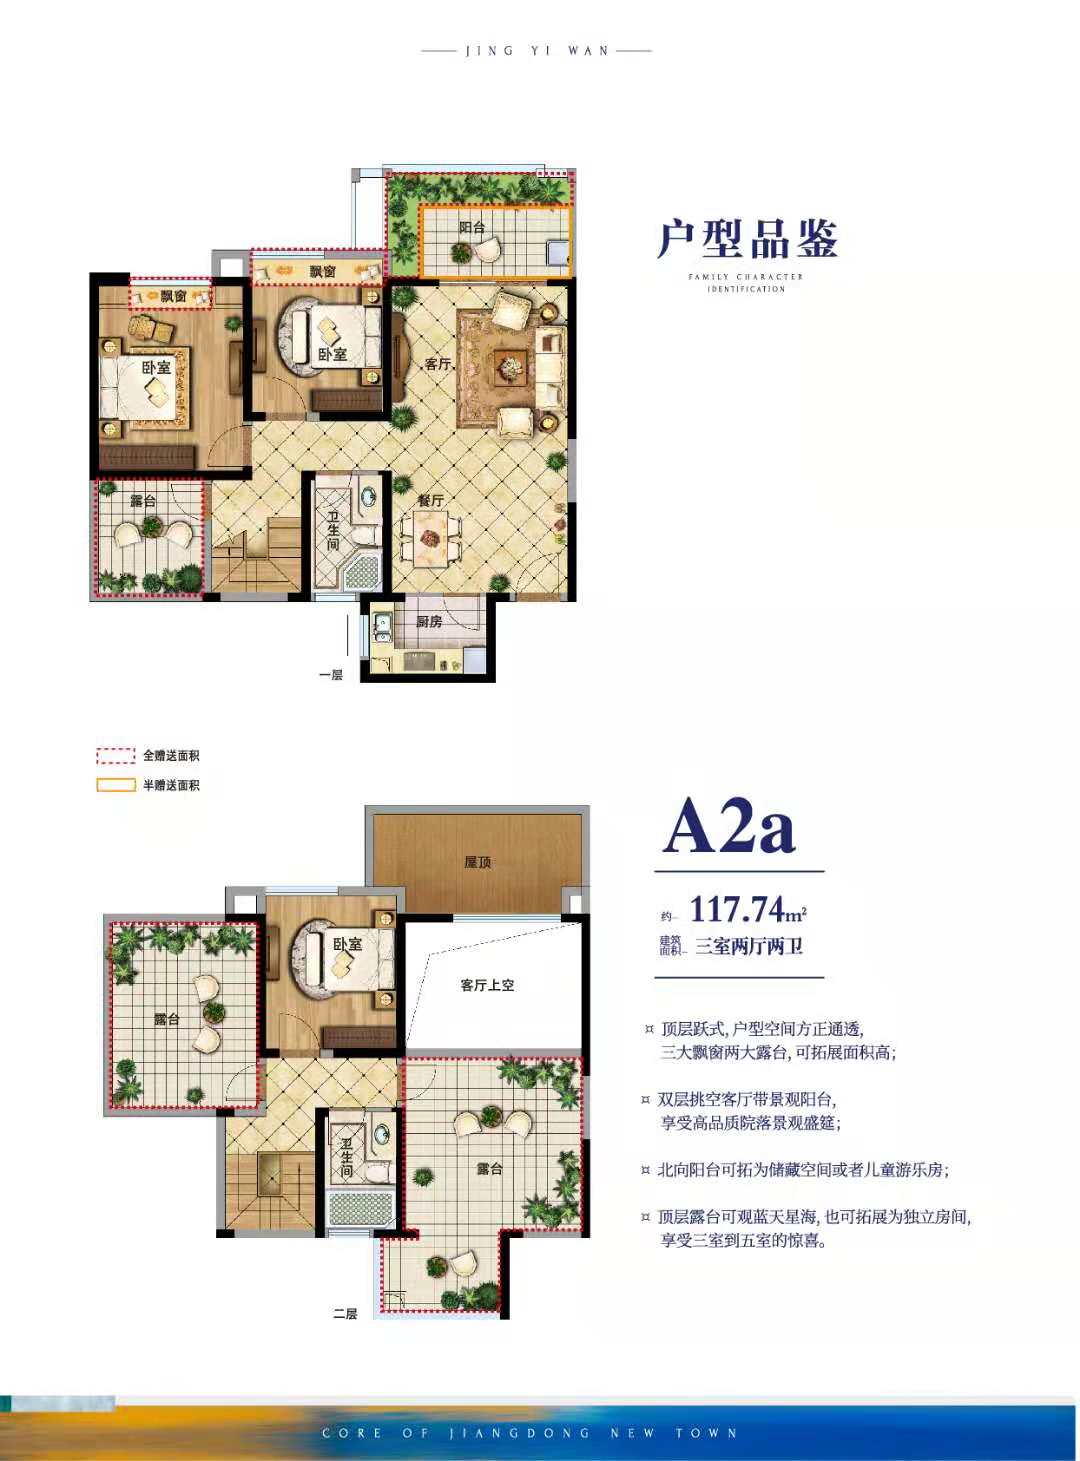 A2a：三室两厅两卫